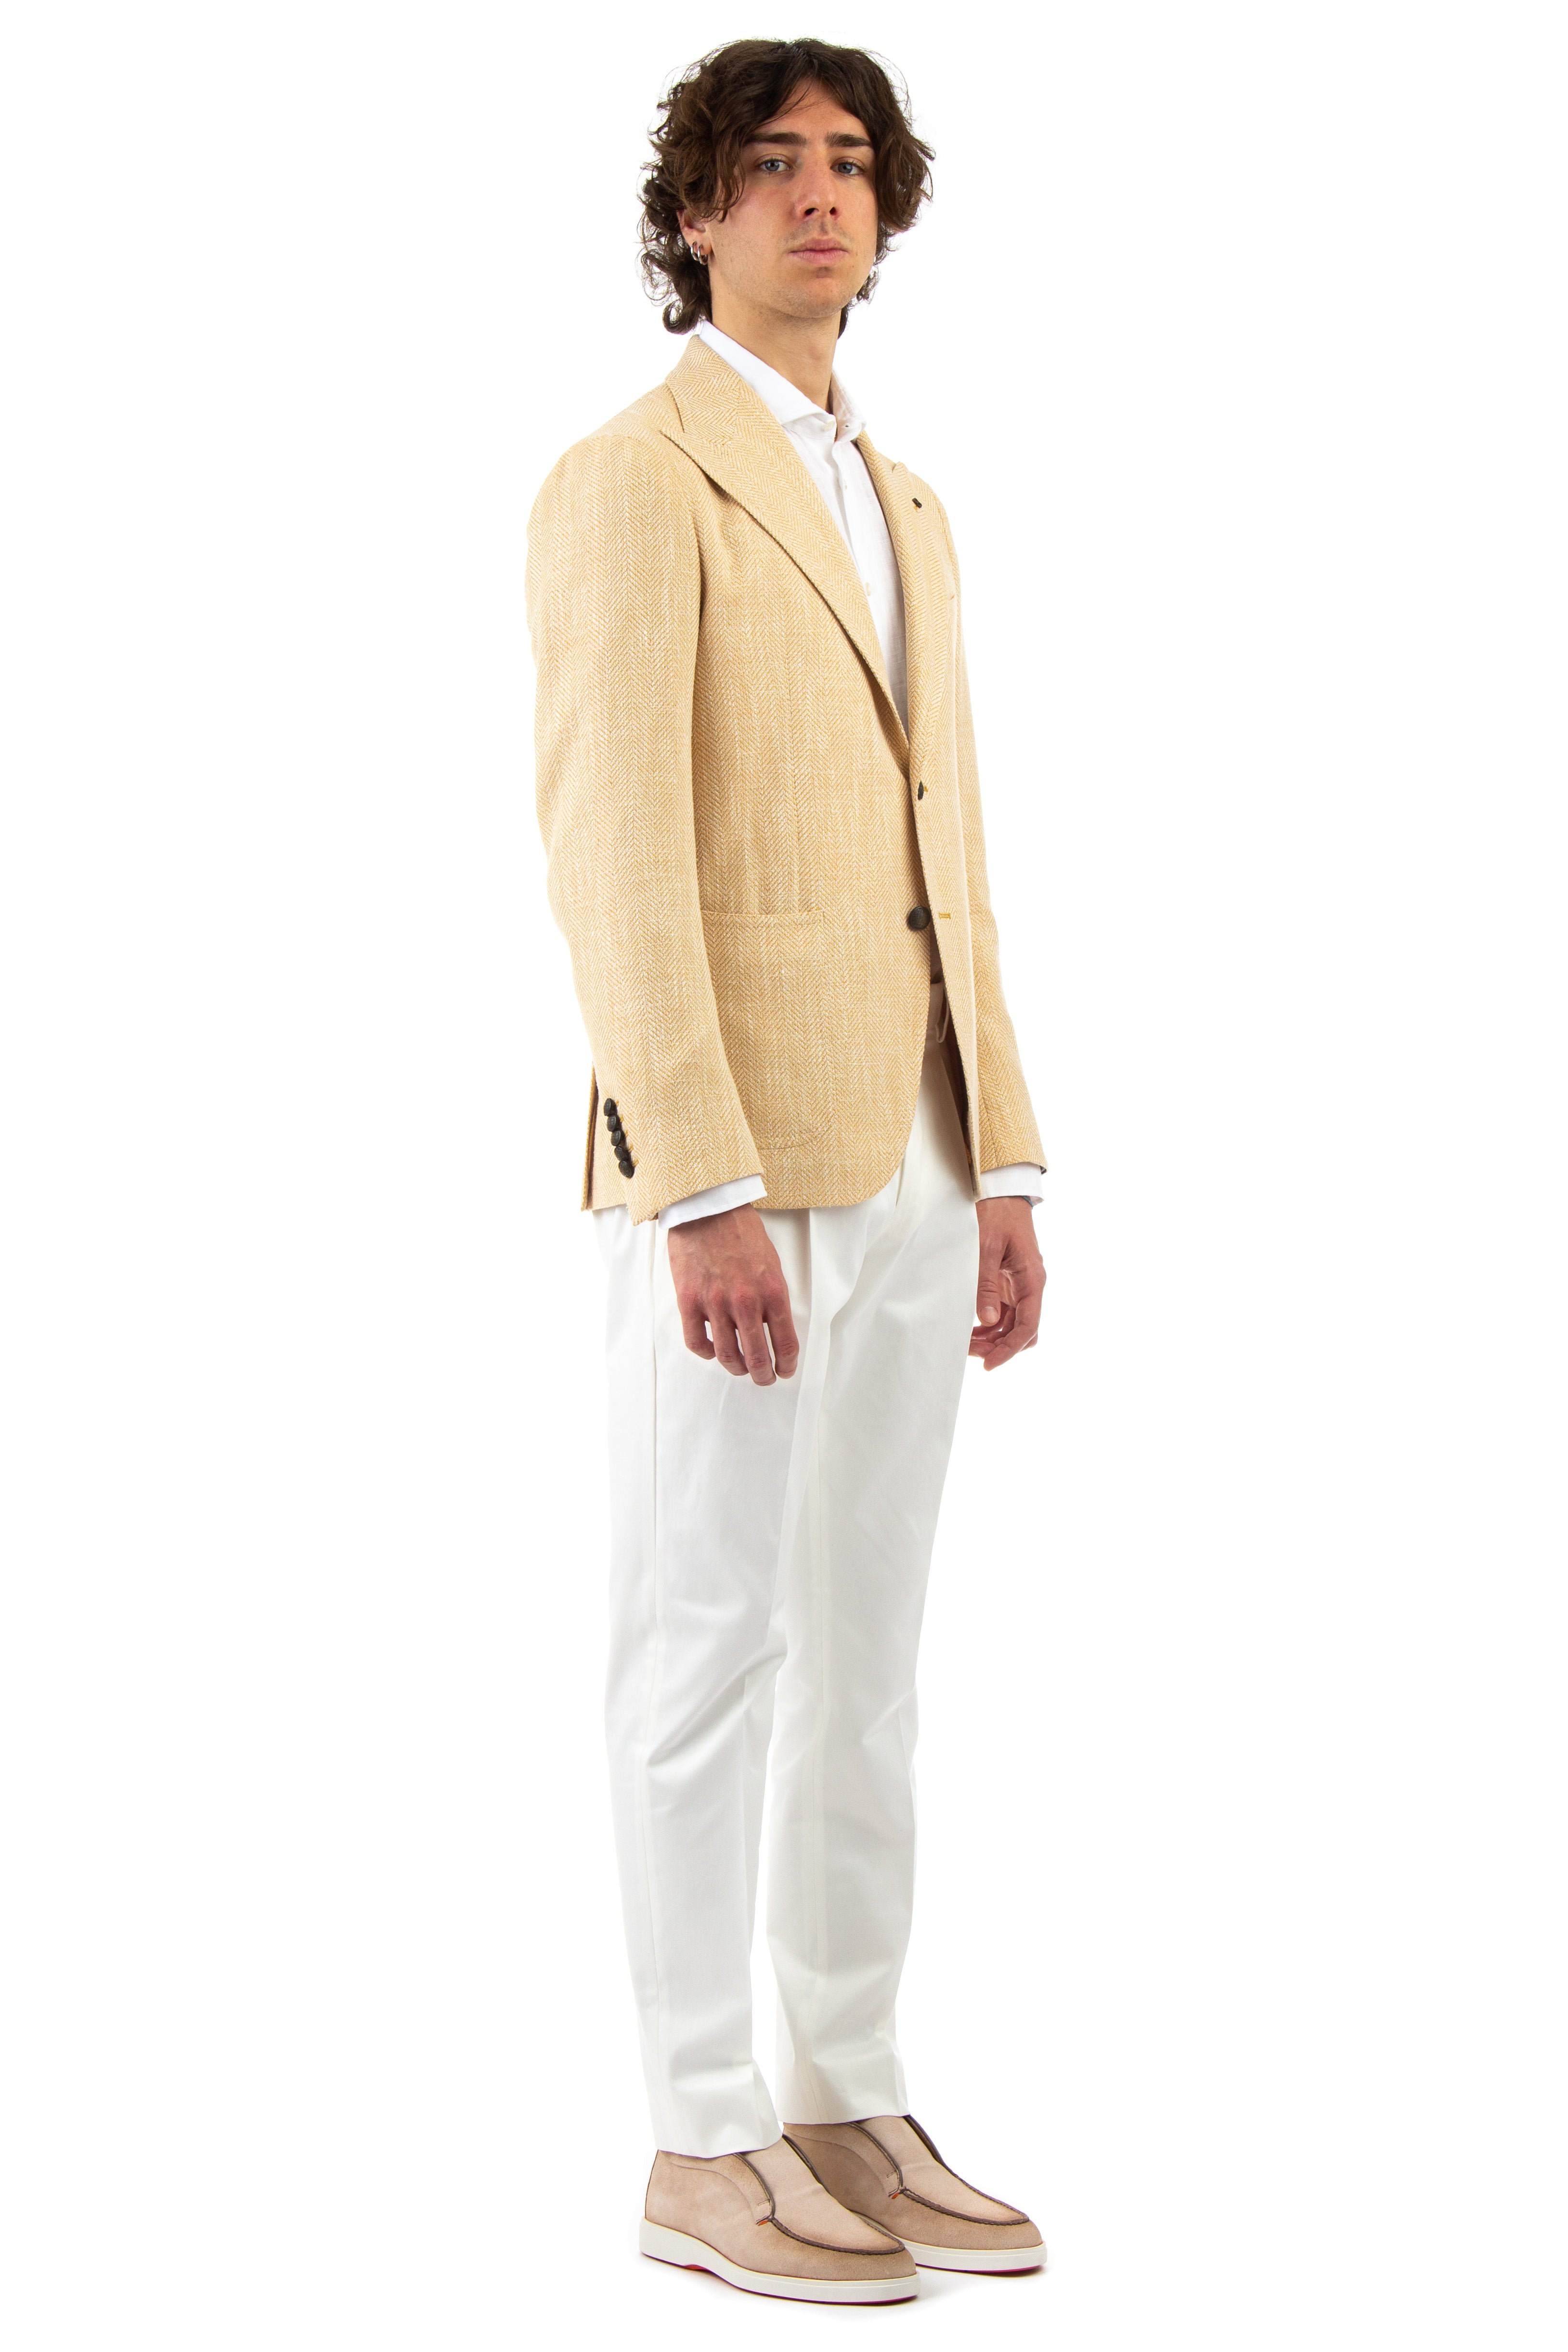 Herringbone jacket in wool-silk-cotton pino lerario line